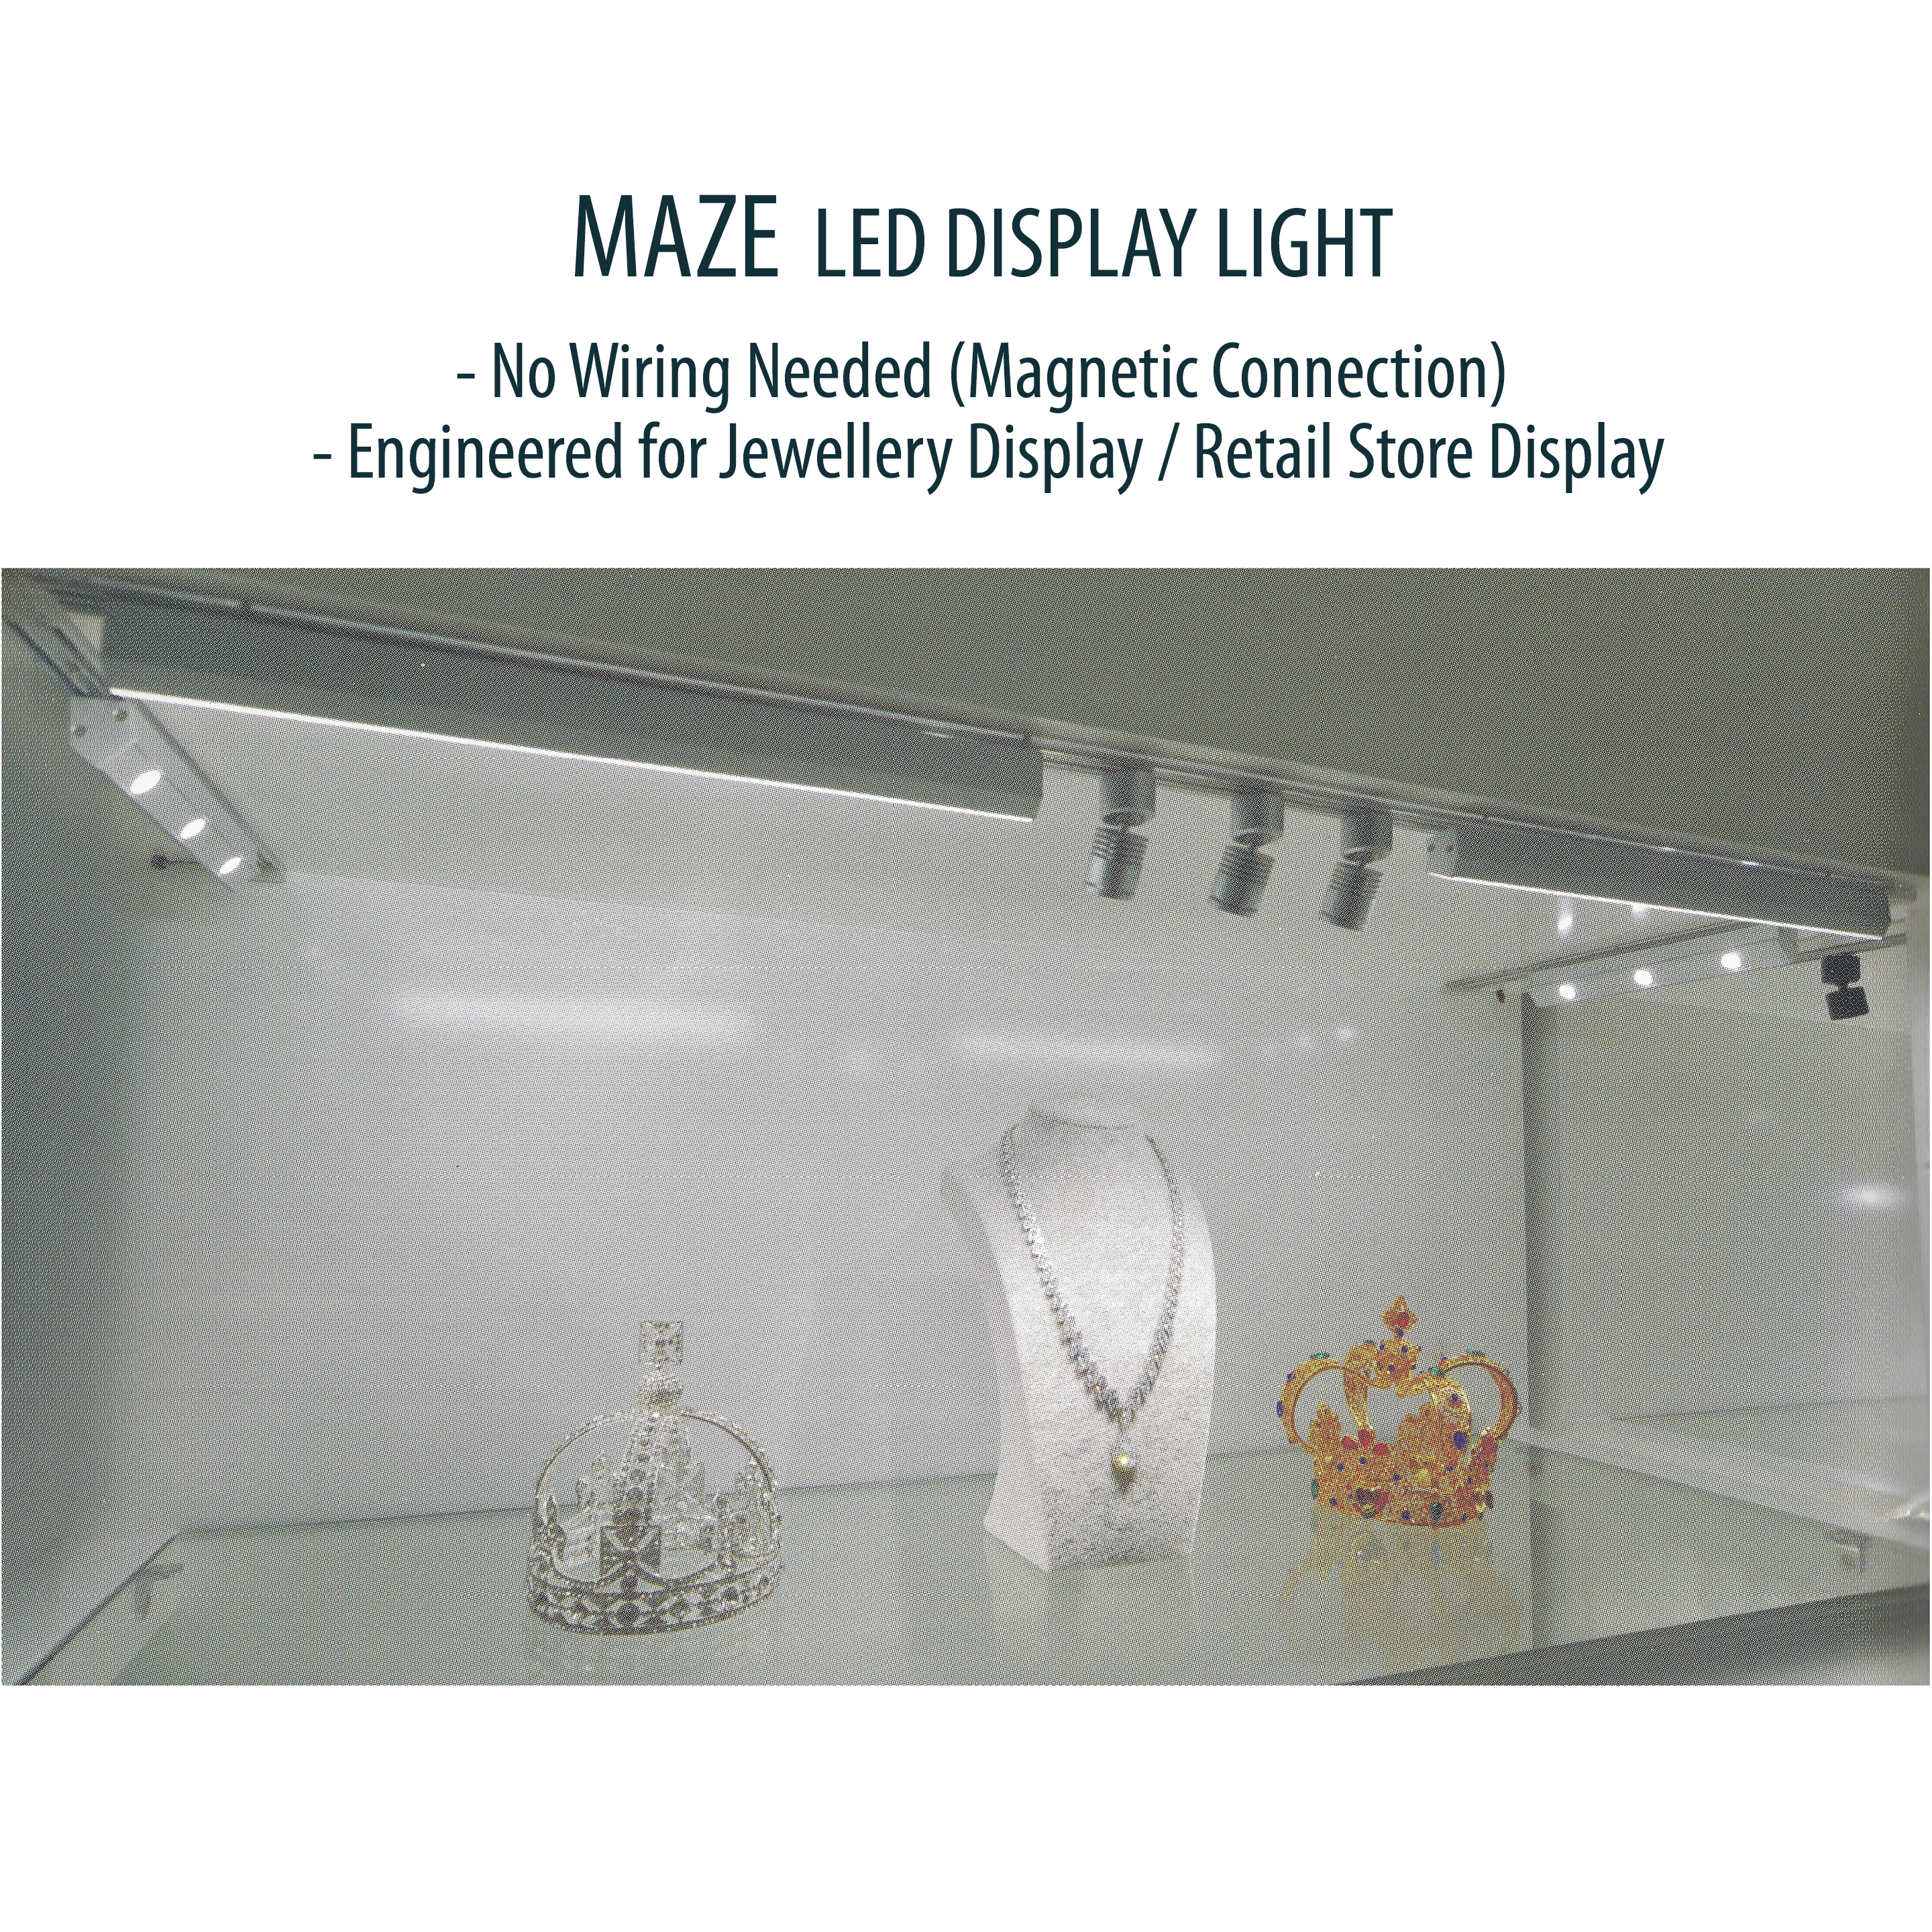 Maze LED Lighting System